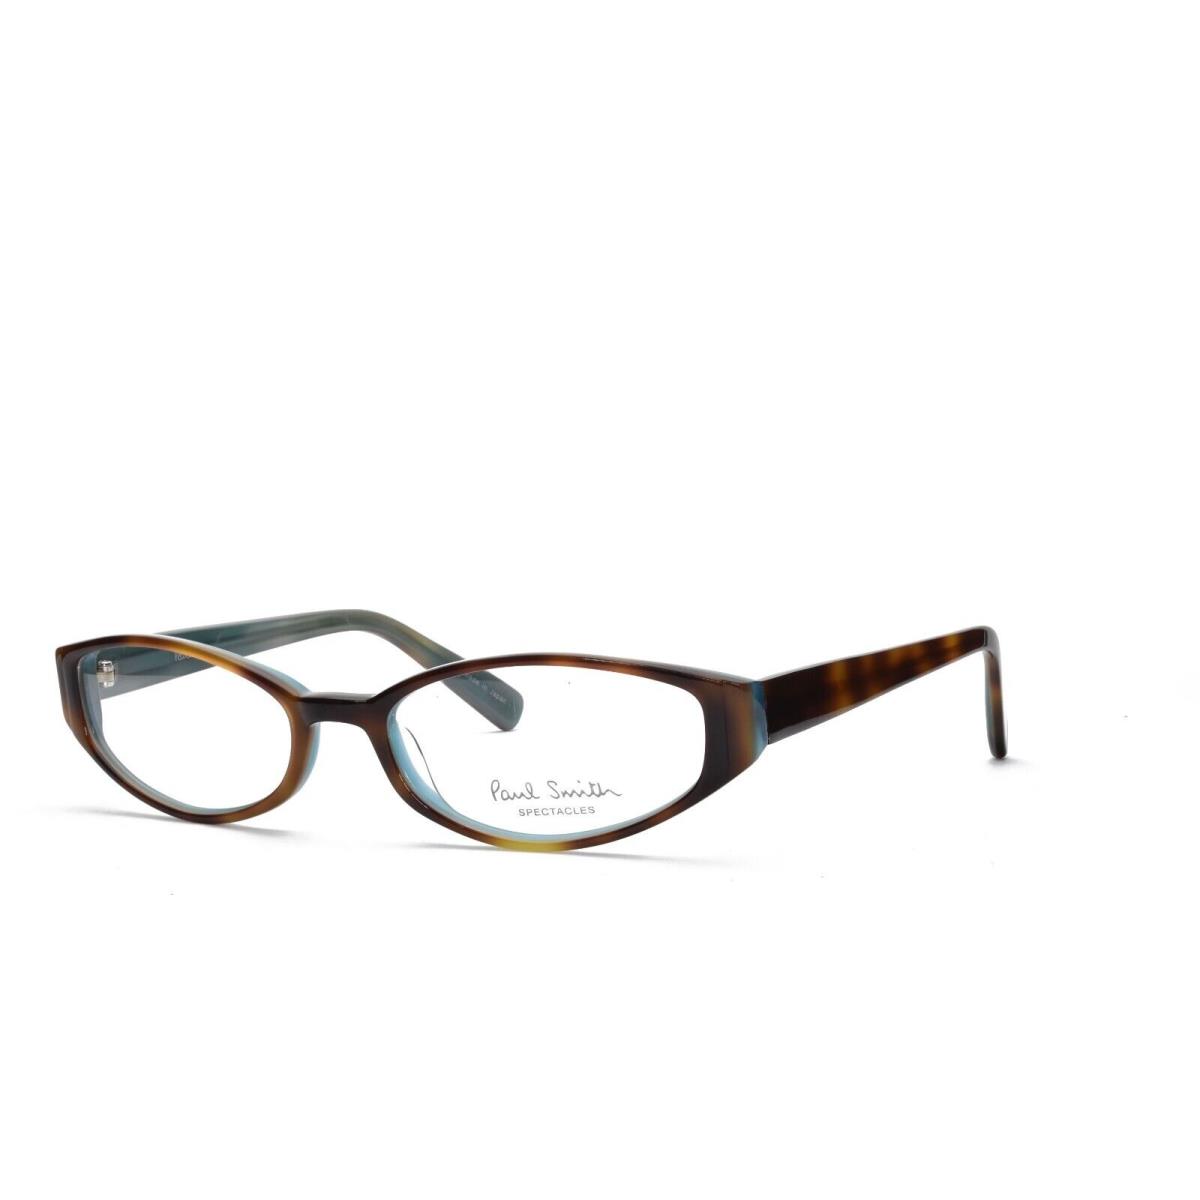 Paul Smith 281 Dmaq 51-17-135 Brown Tortoise Vtg Vintage Eyeglasses Frames